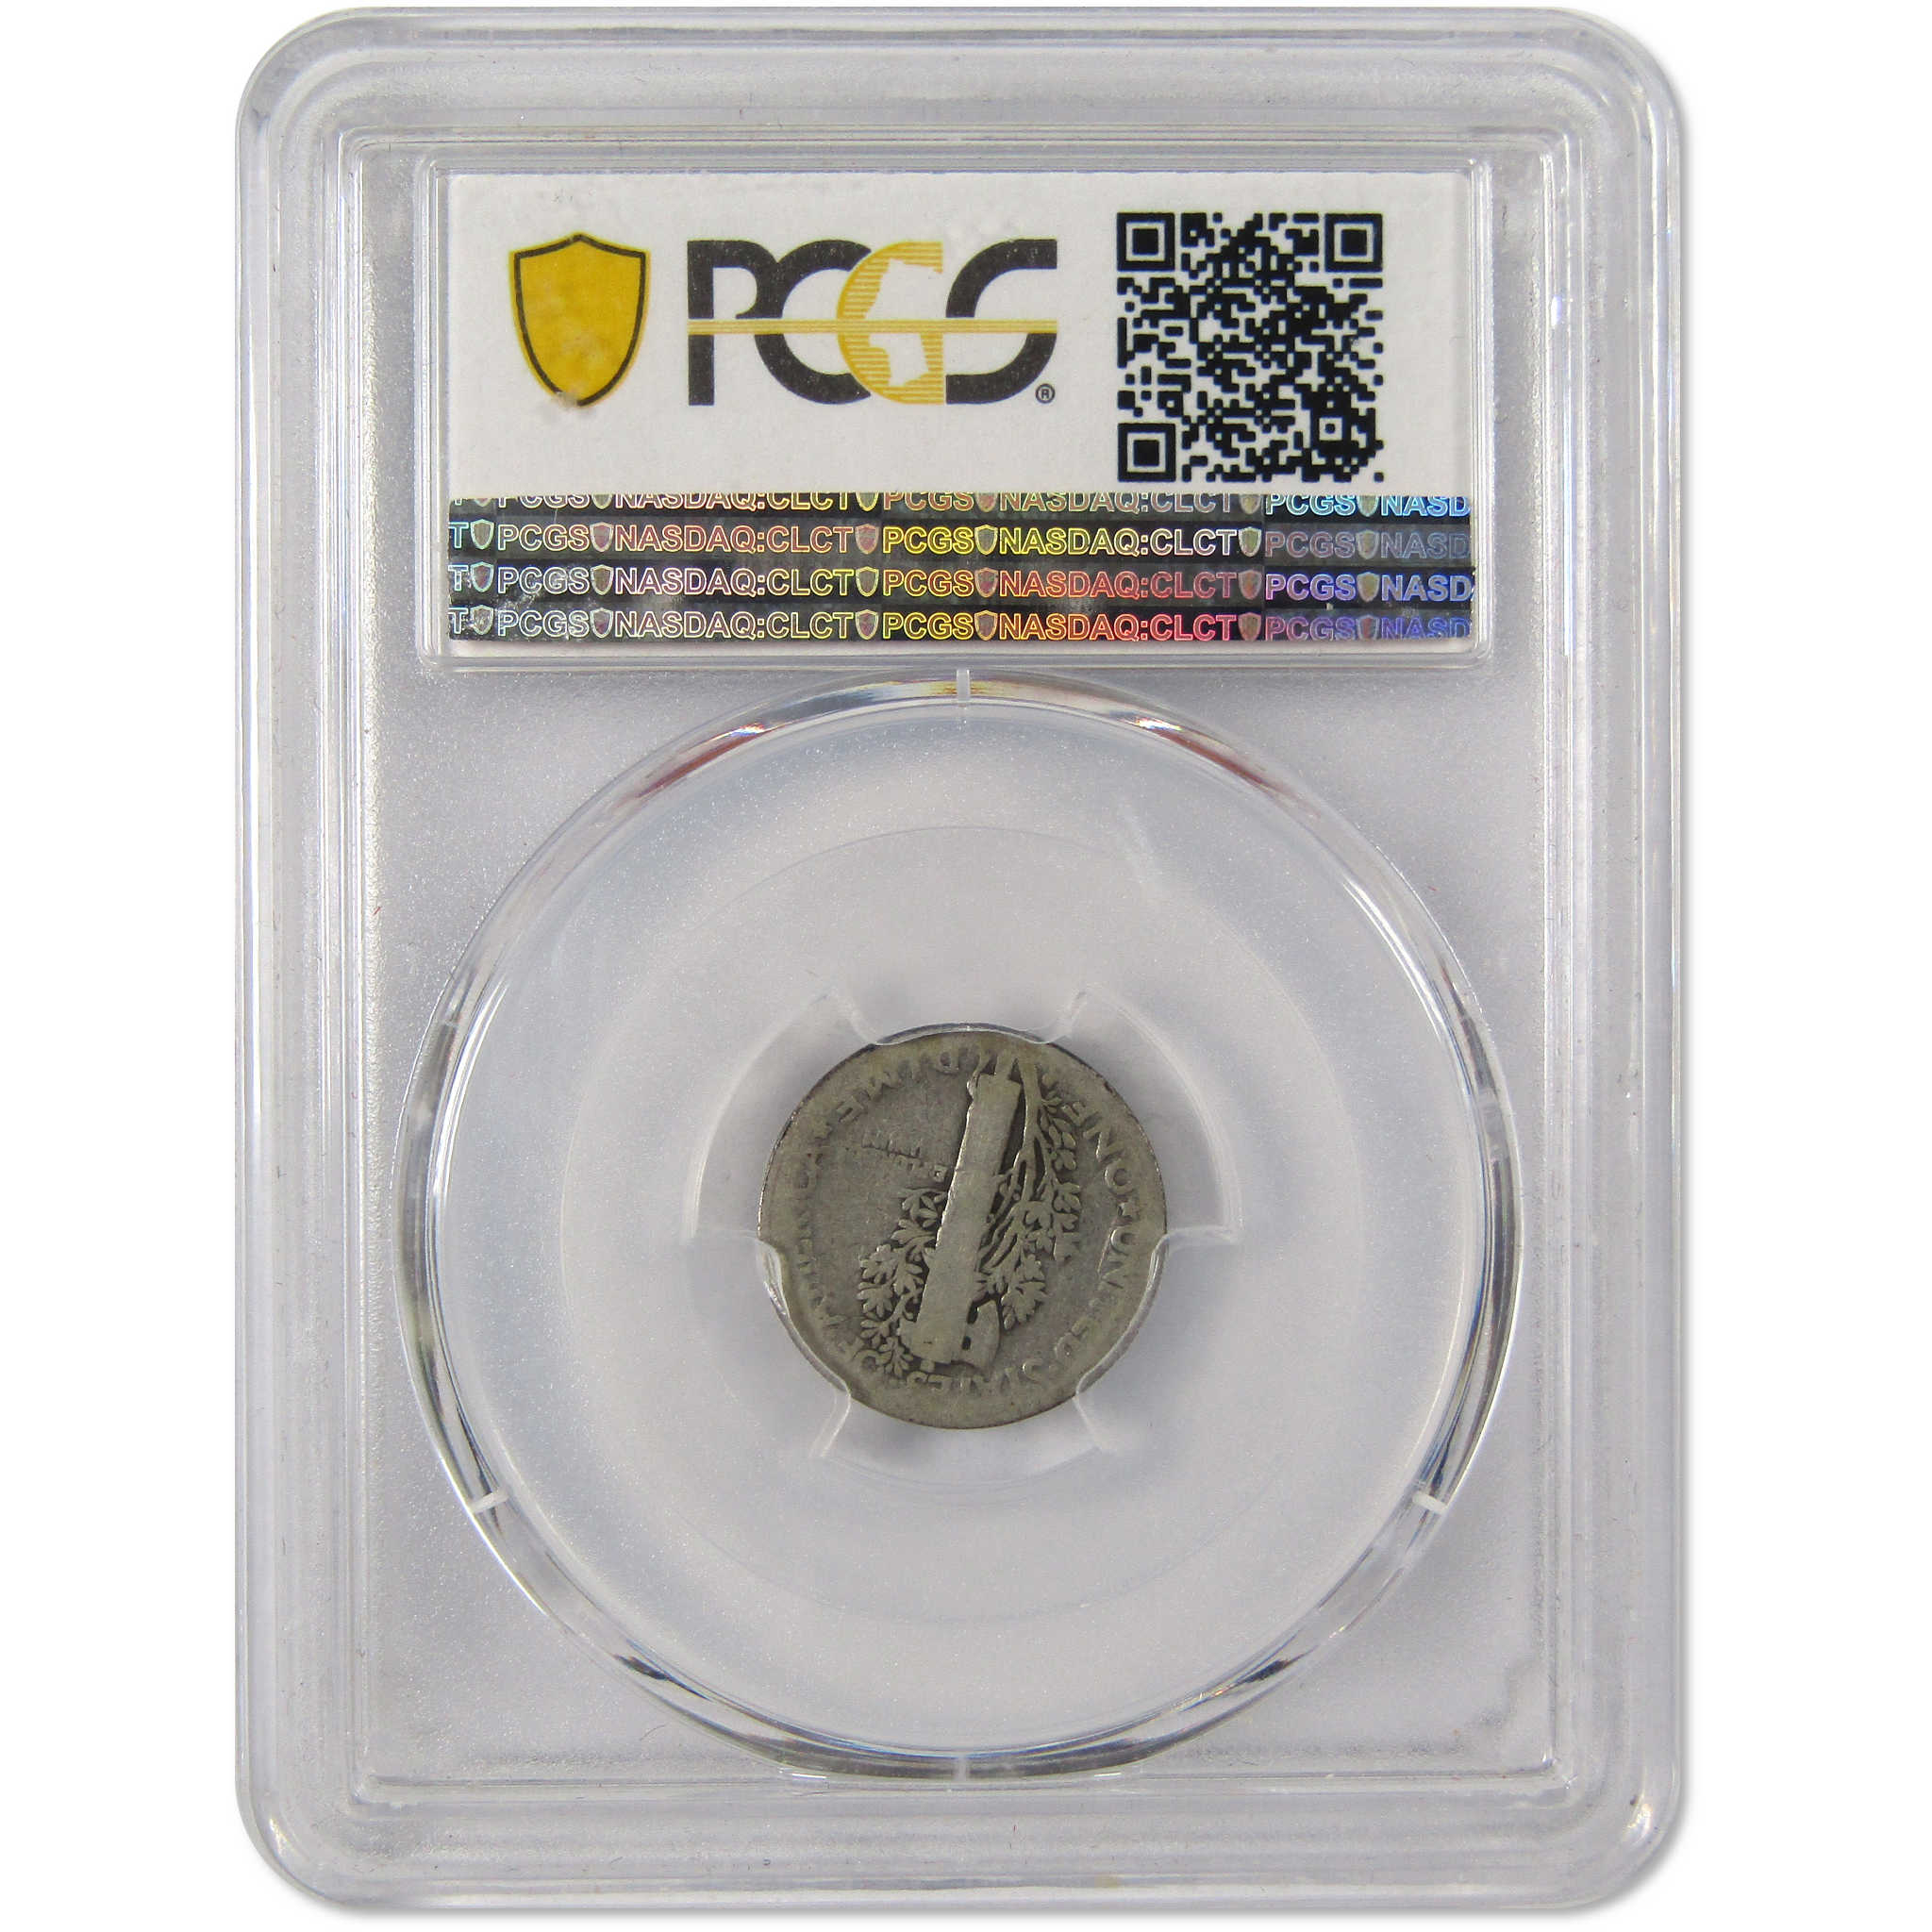 1916 D Mercury Dime AG 3 PCGS 90% Silver 10c Coin SKU:I9532